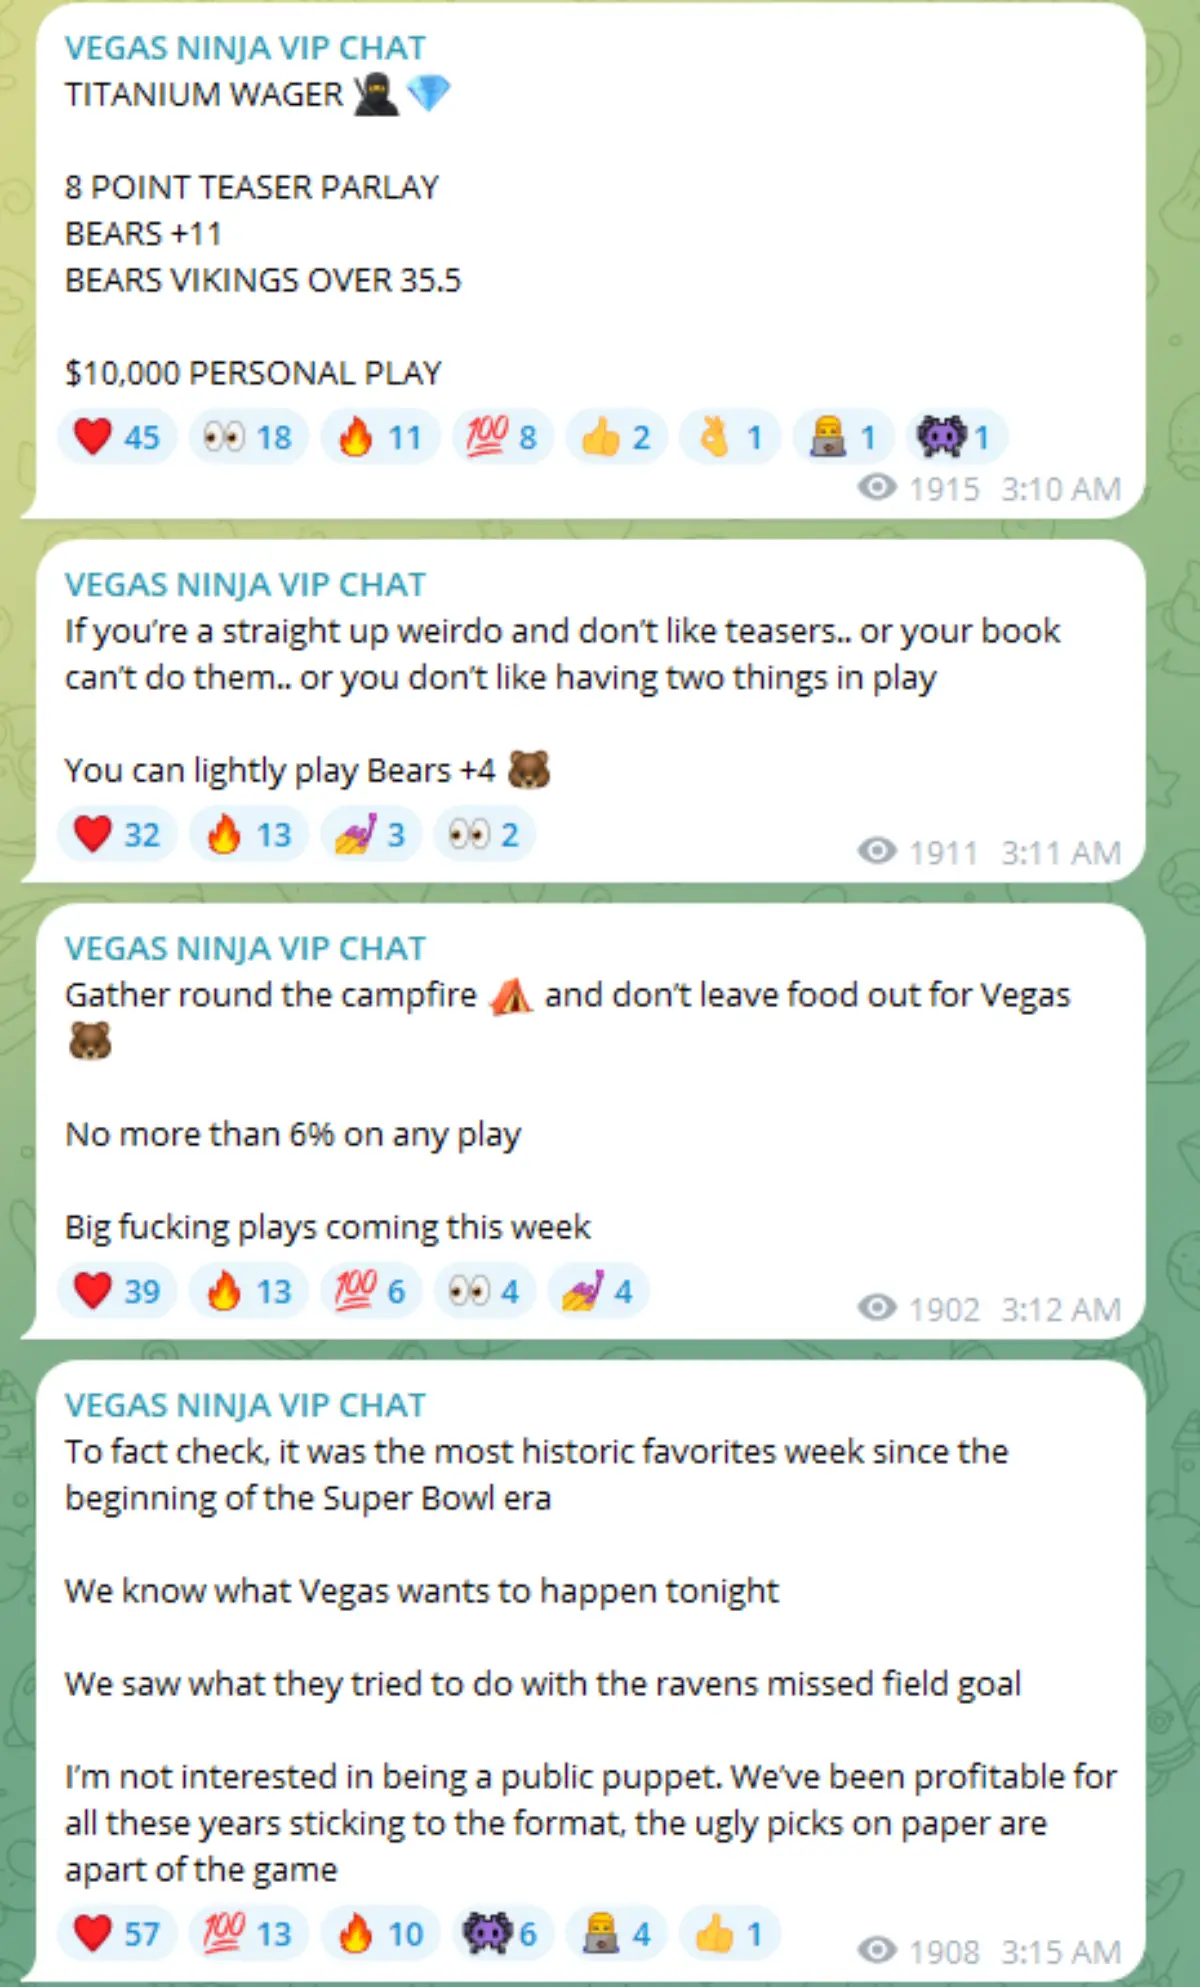 Vegas Ninja VIP Telegram chat